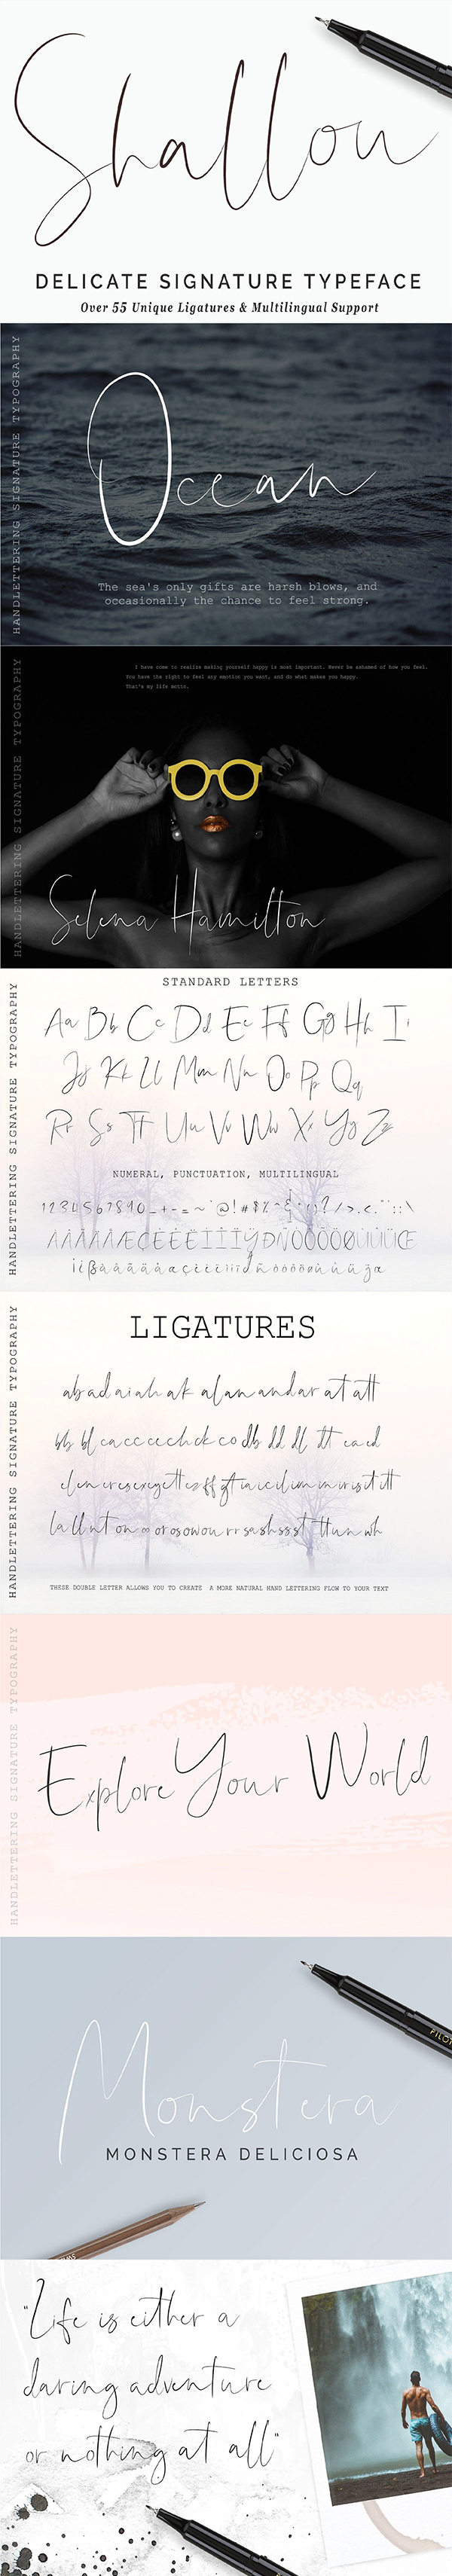 Shallou Hand-Made Free Font